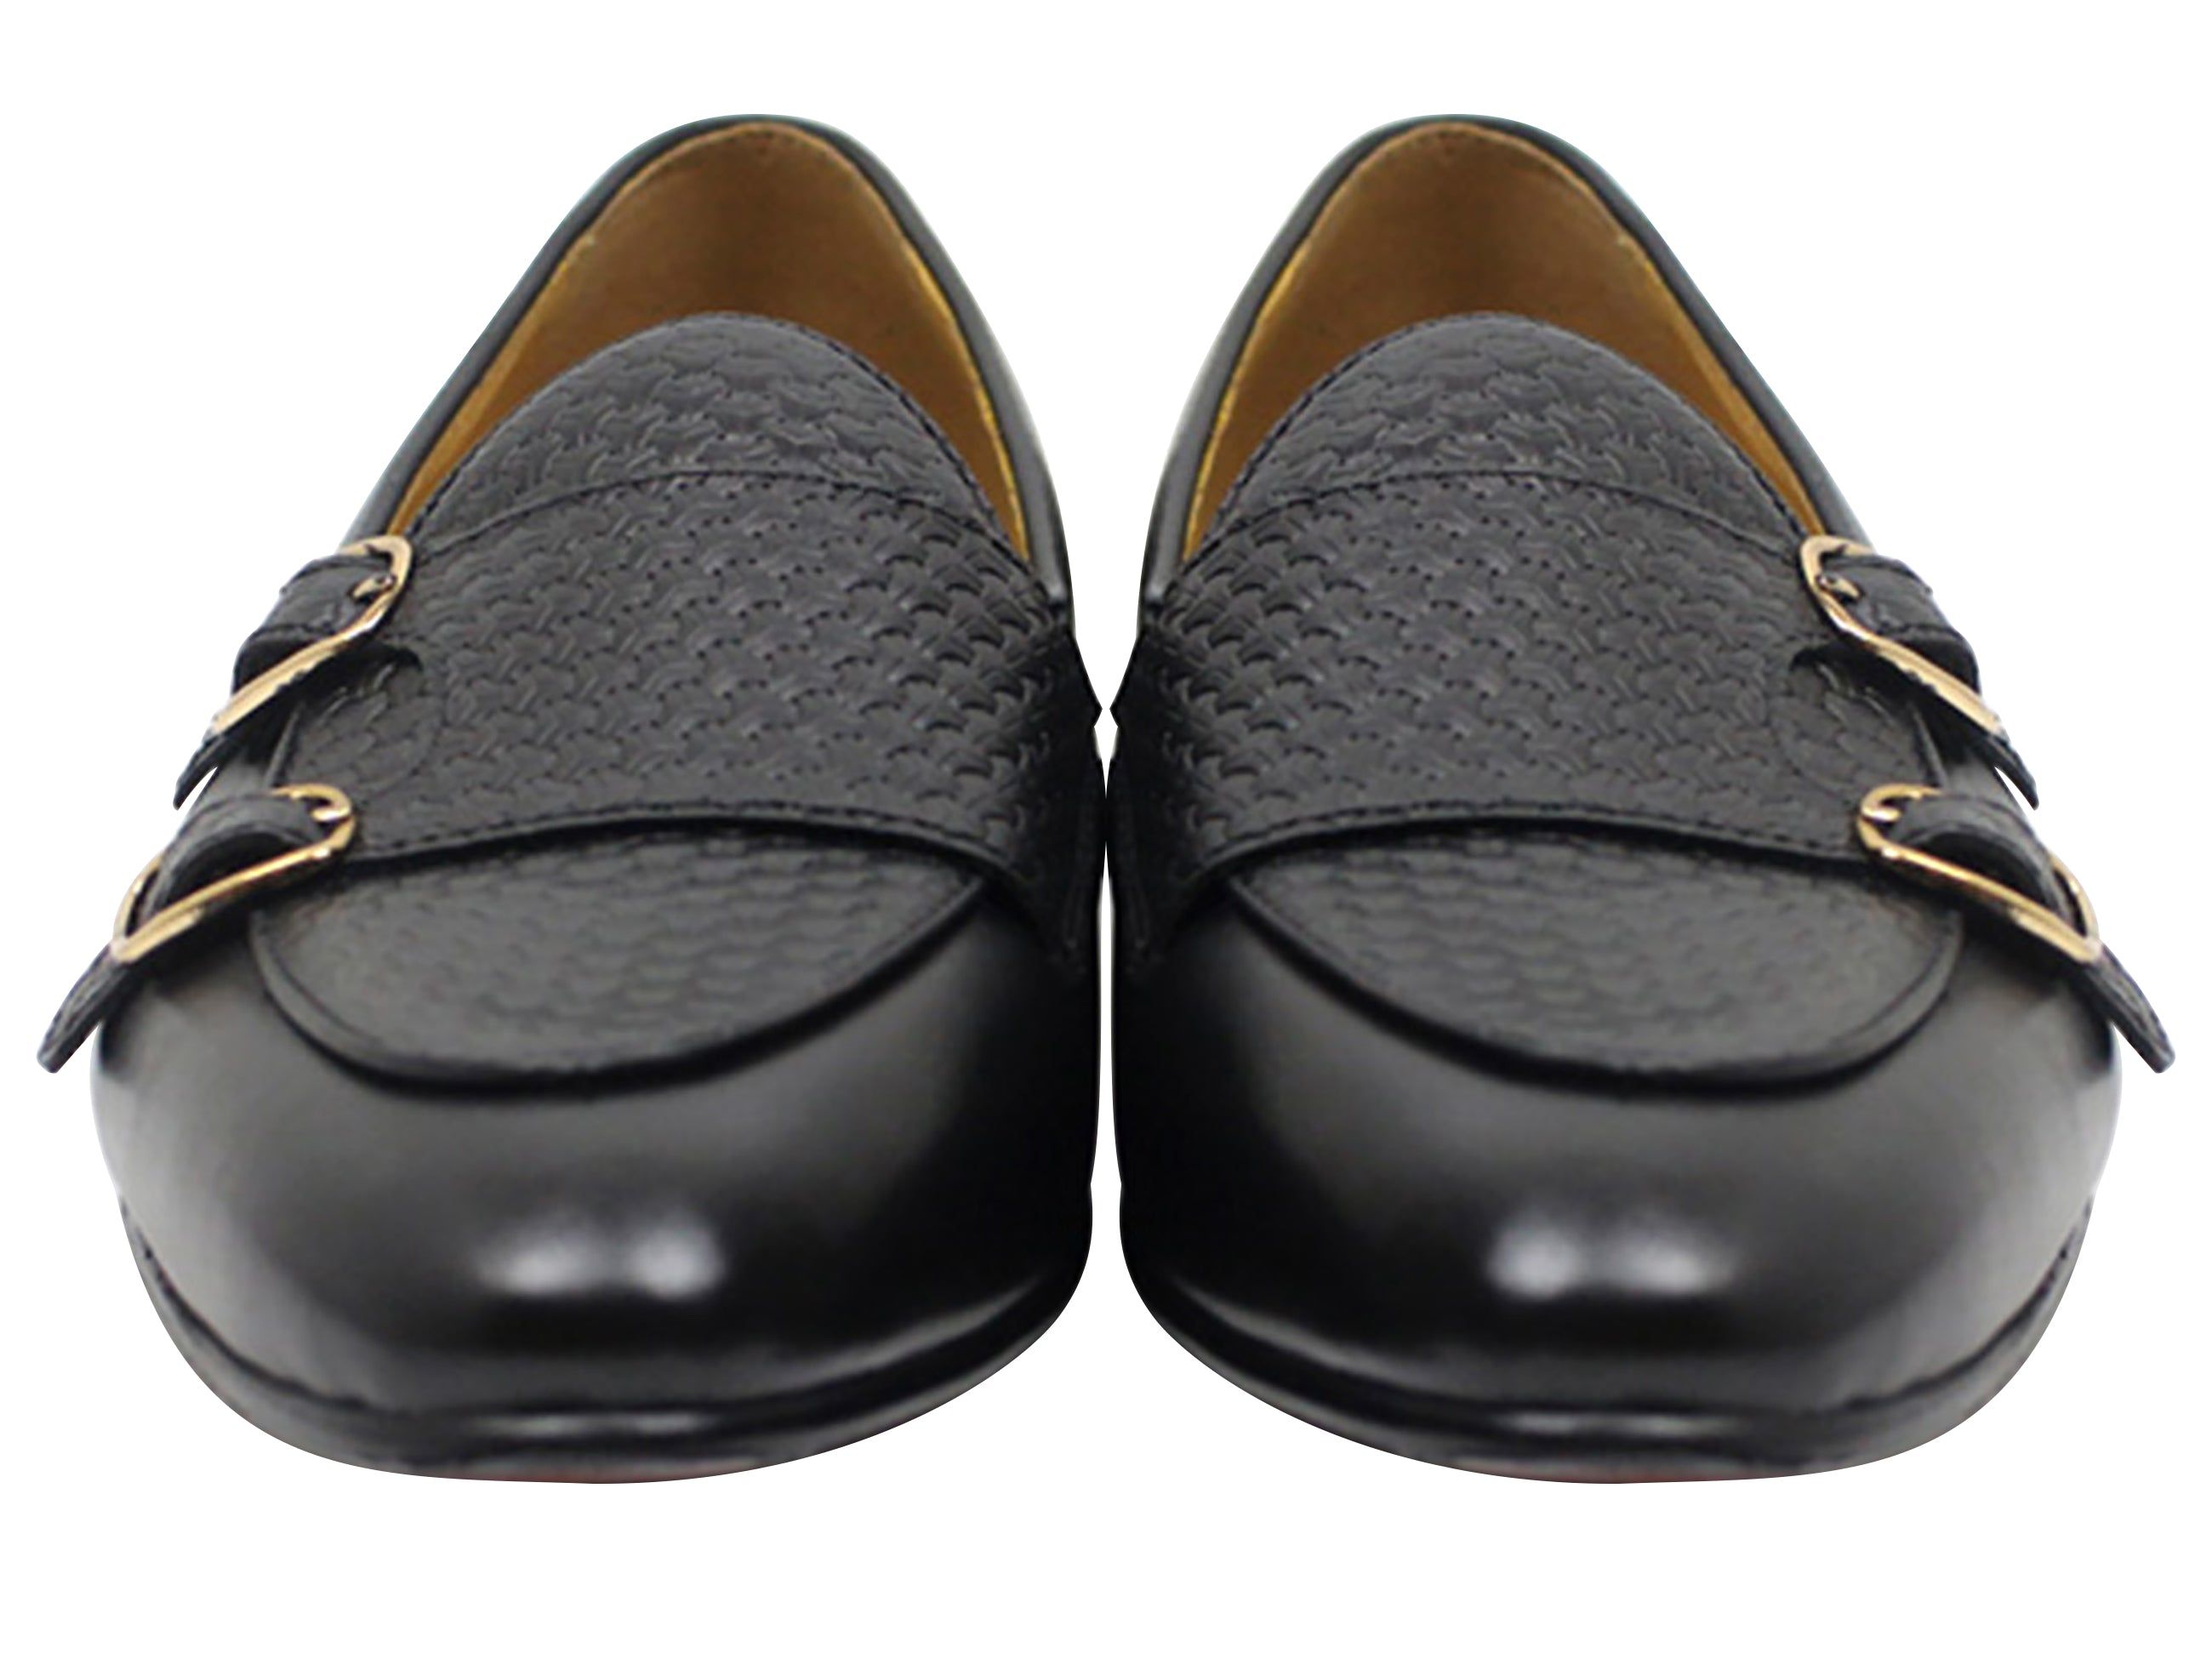 Men's Dress Formal Handmade Monk Strap Loafers